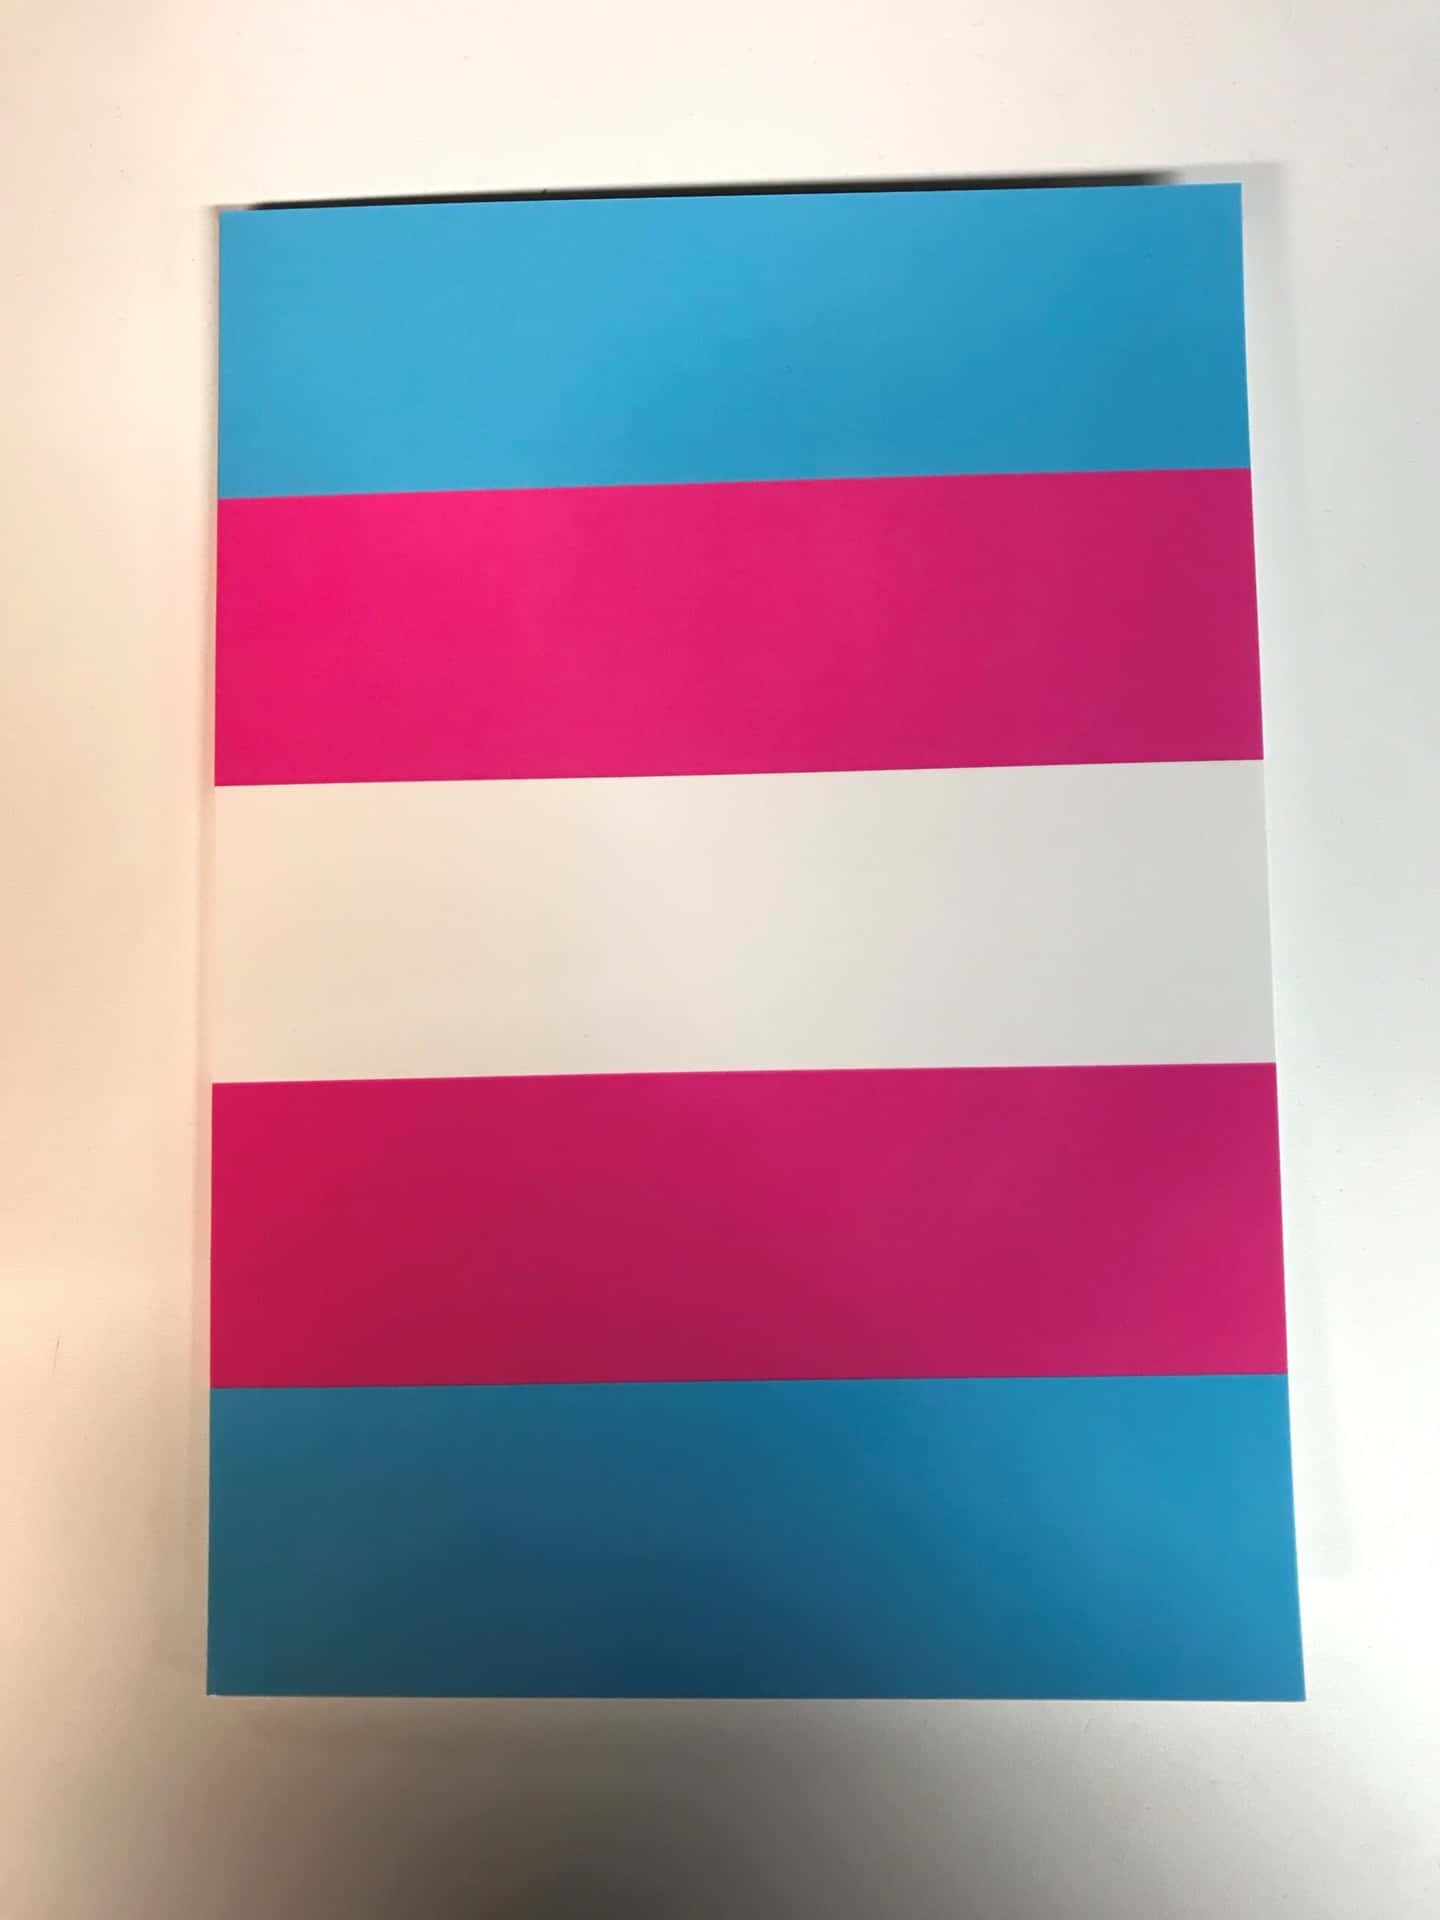 A Transgender Flag On A White Surface Wallpaper